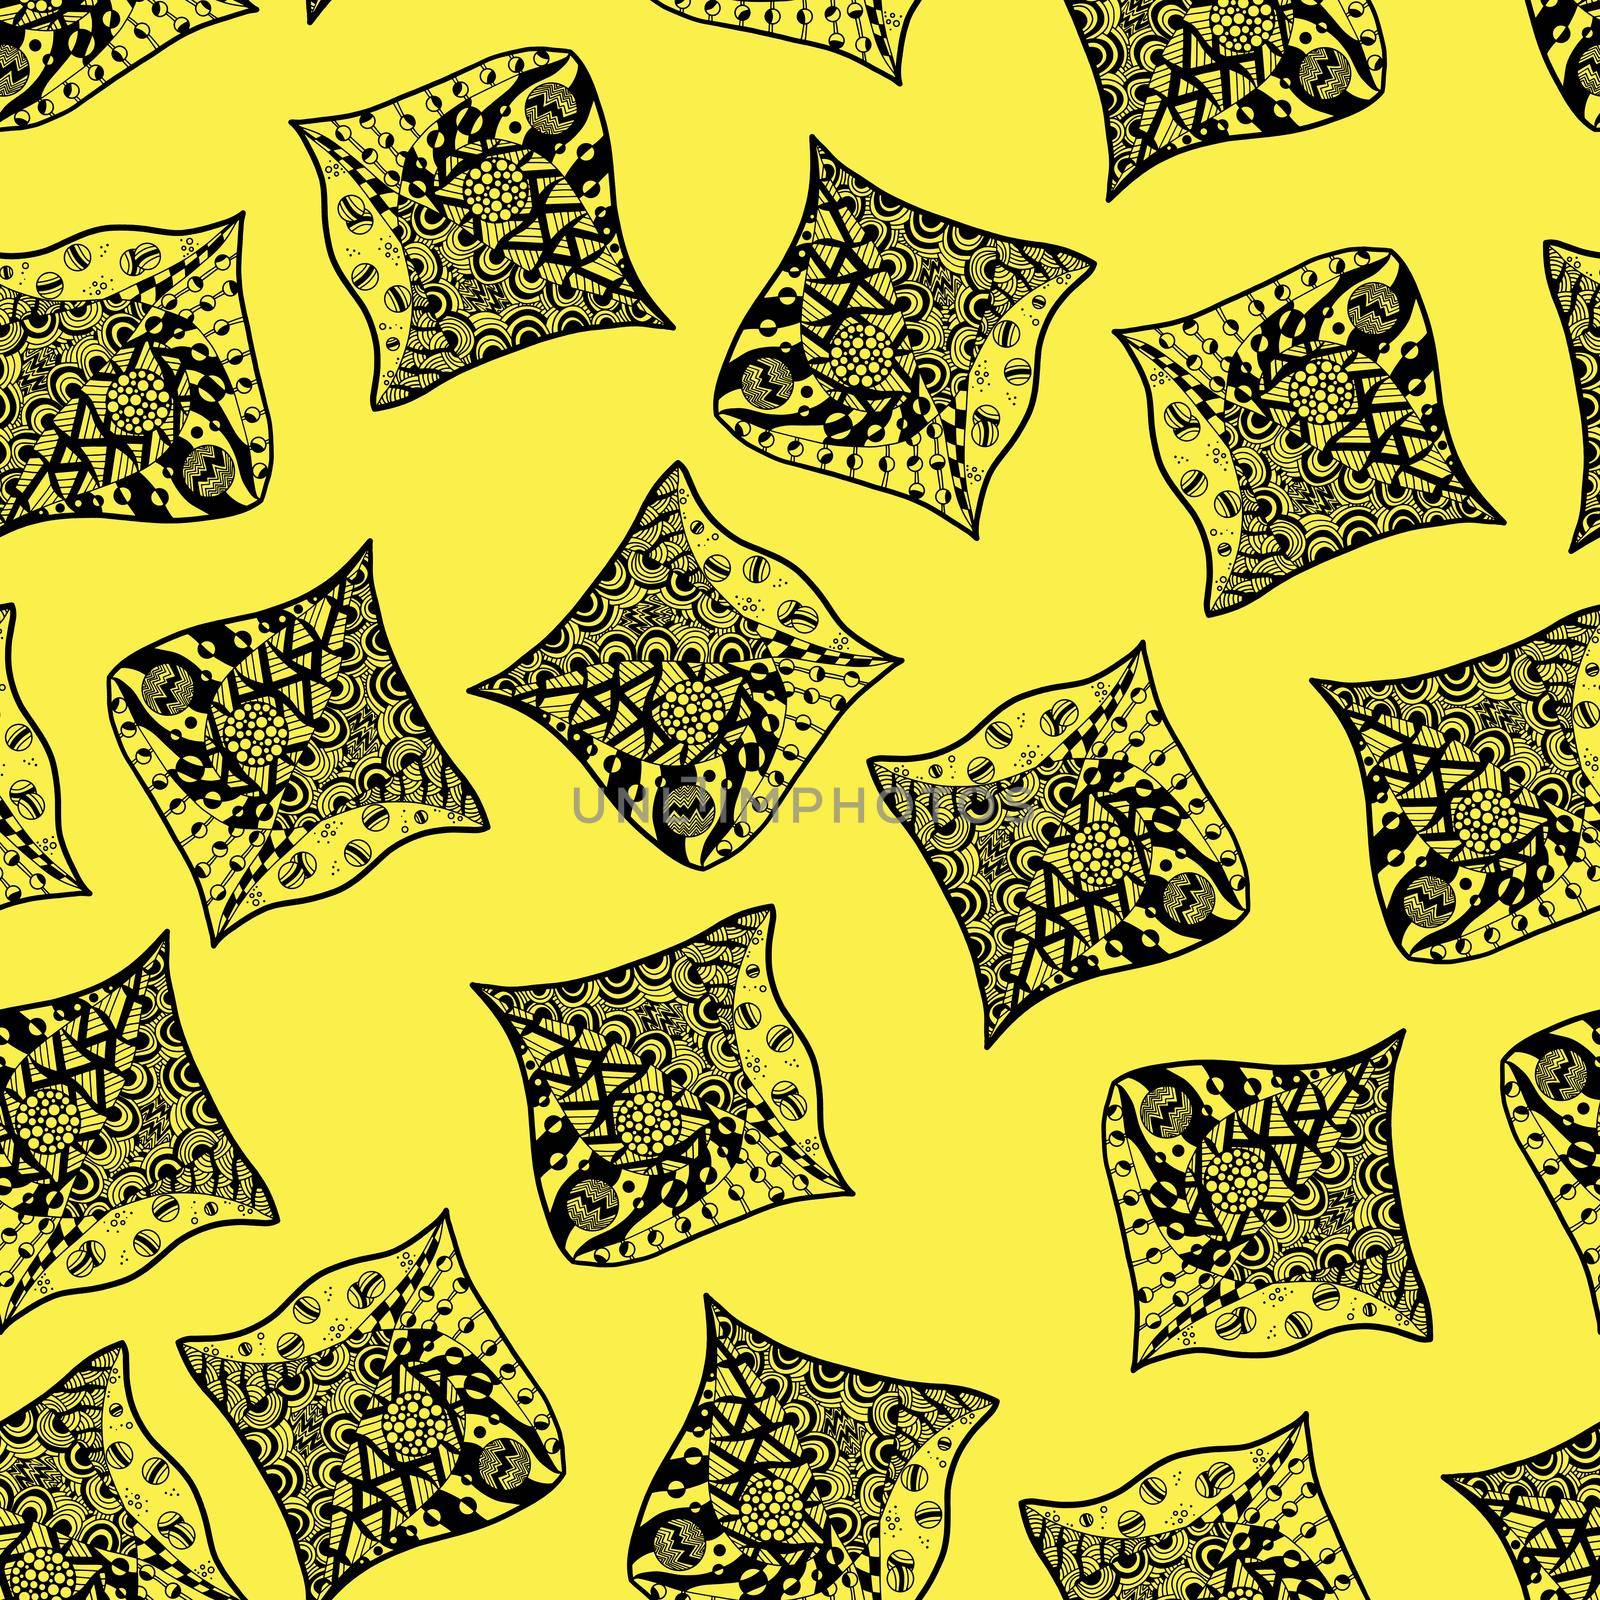 Abstract Zenart Seamless Pattern Illustration on the Yellow Background.